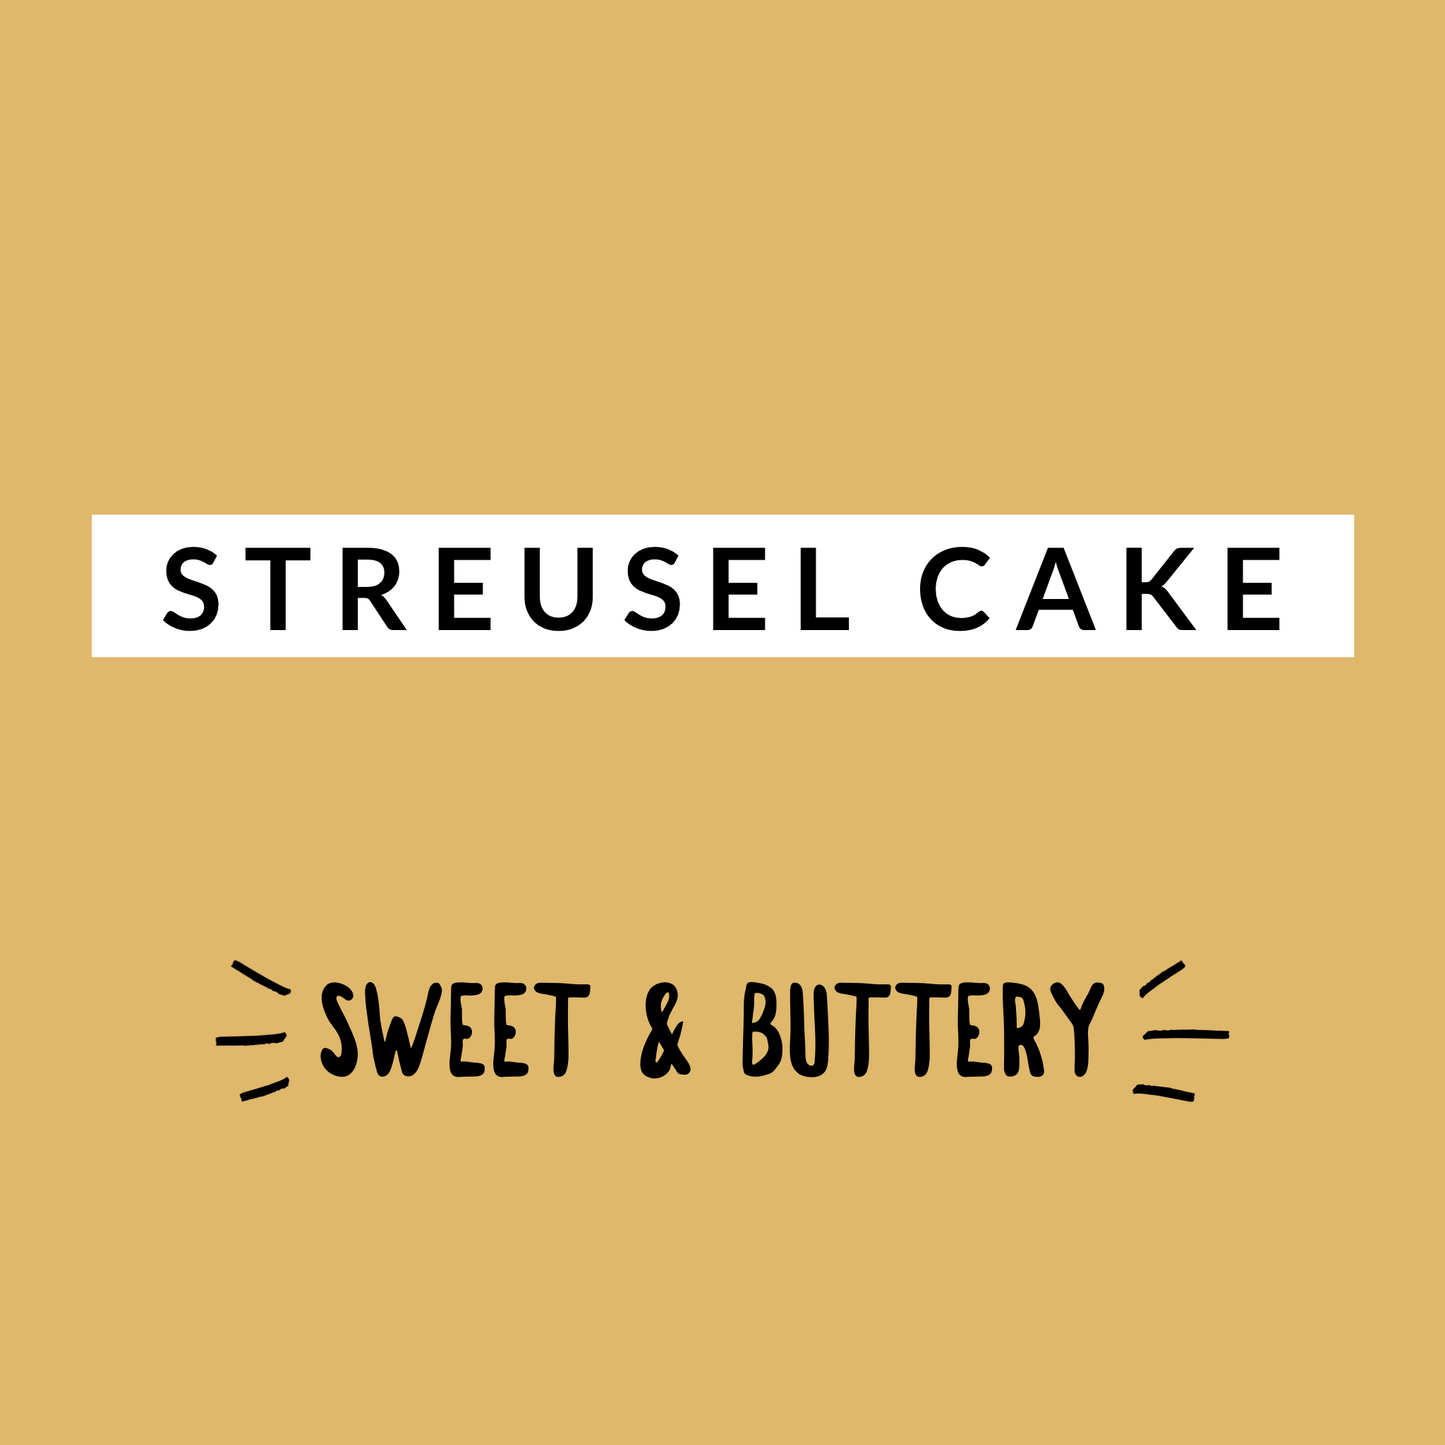 Streusel Cake